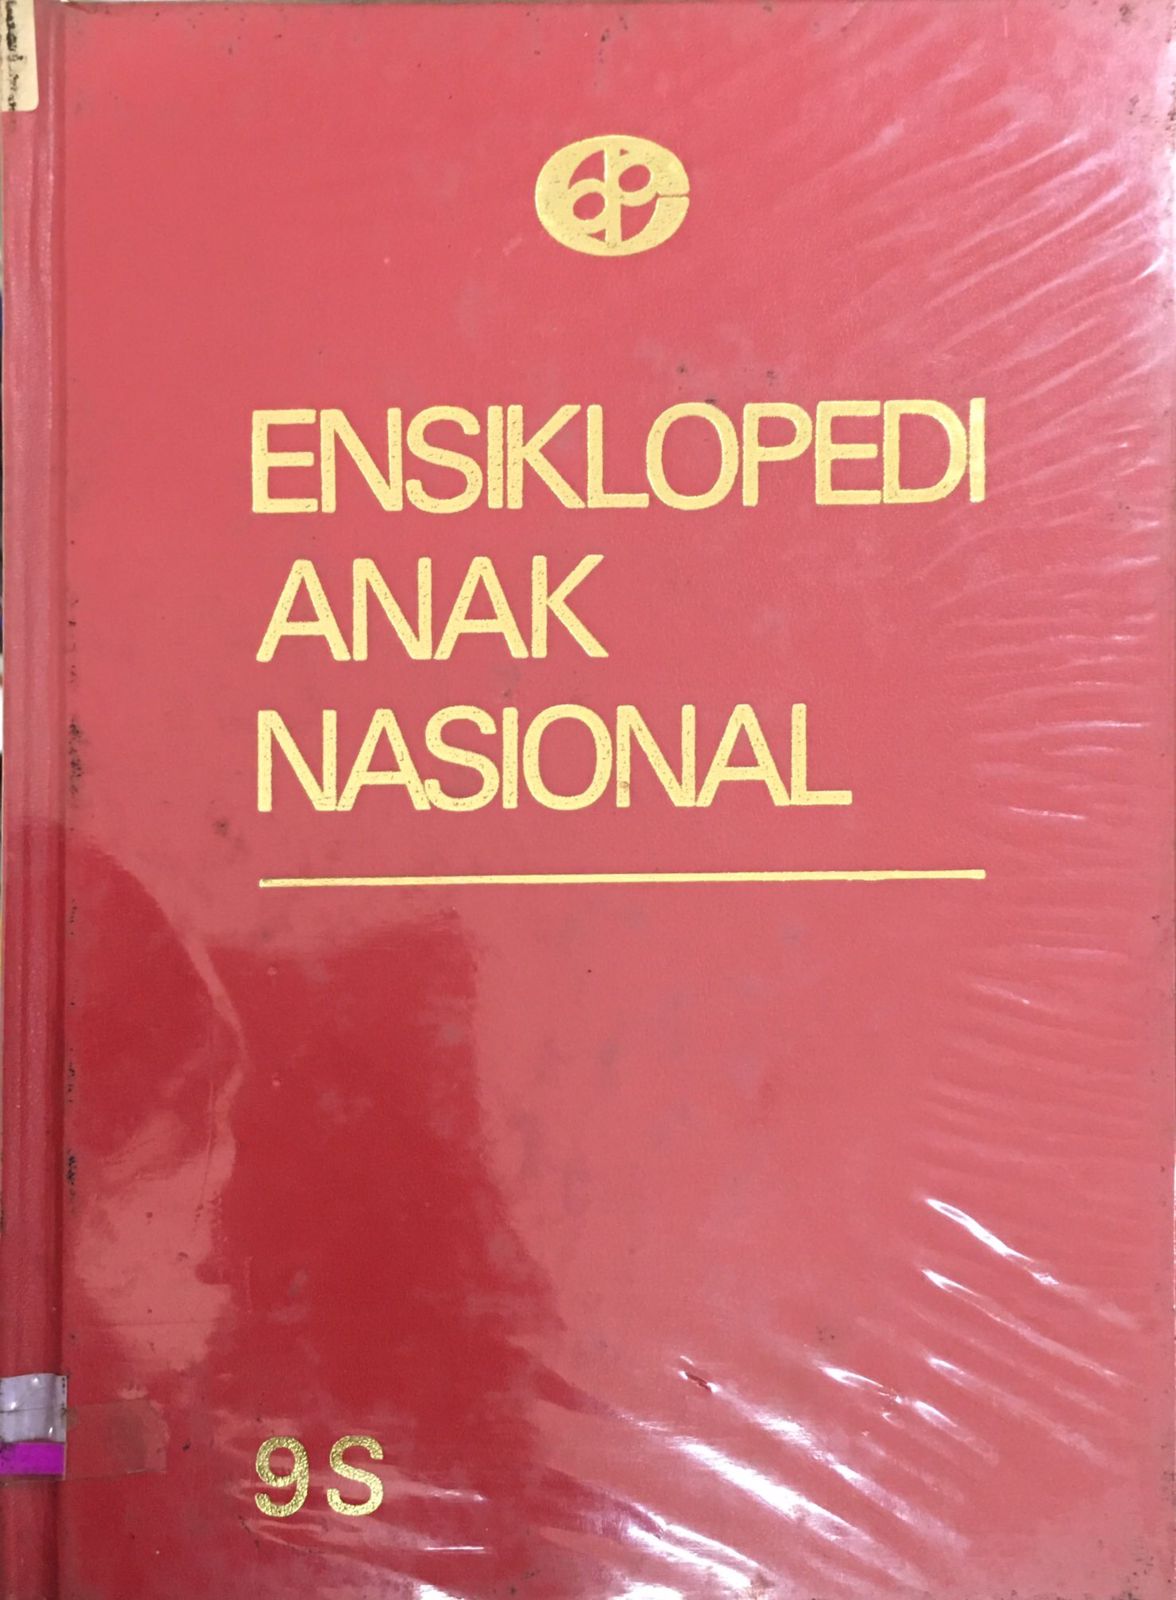 Ensiklopedi anak nasional 9S